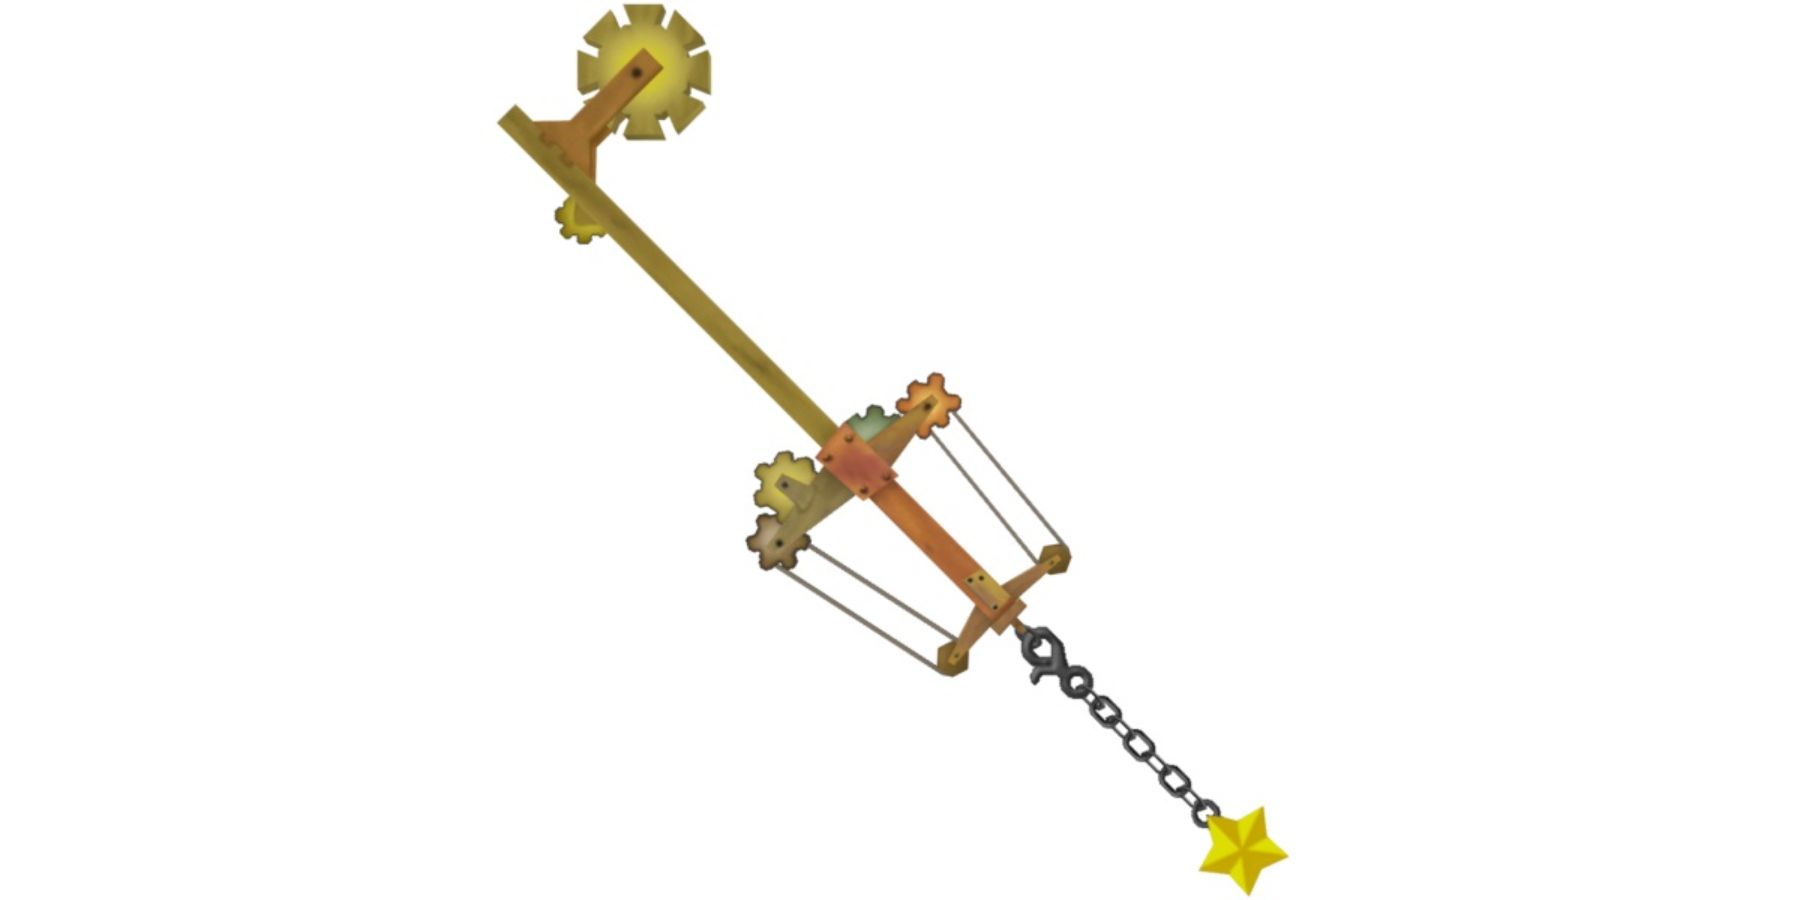 The Wishing Star Keyblade in Kingdom Hearts